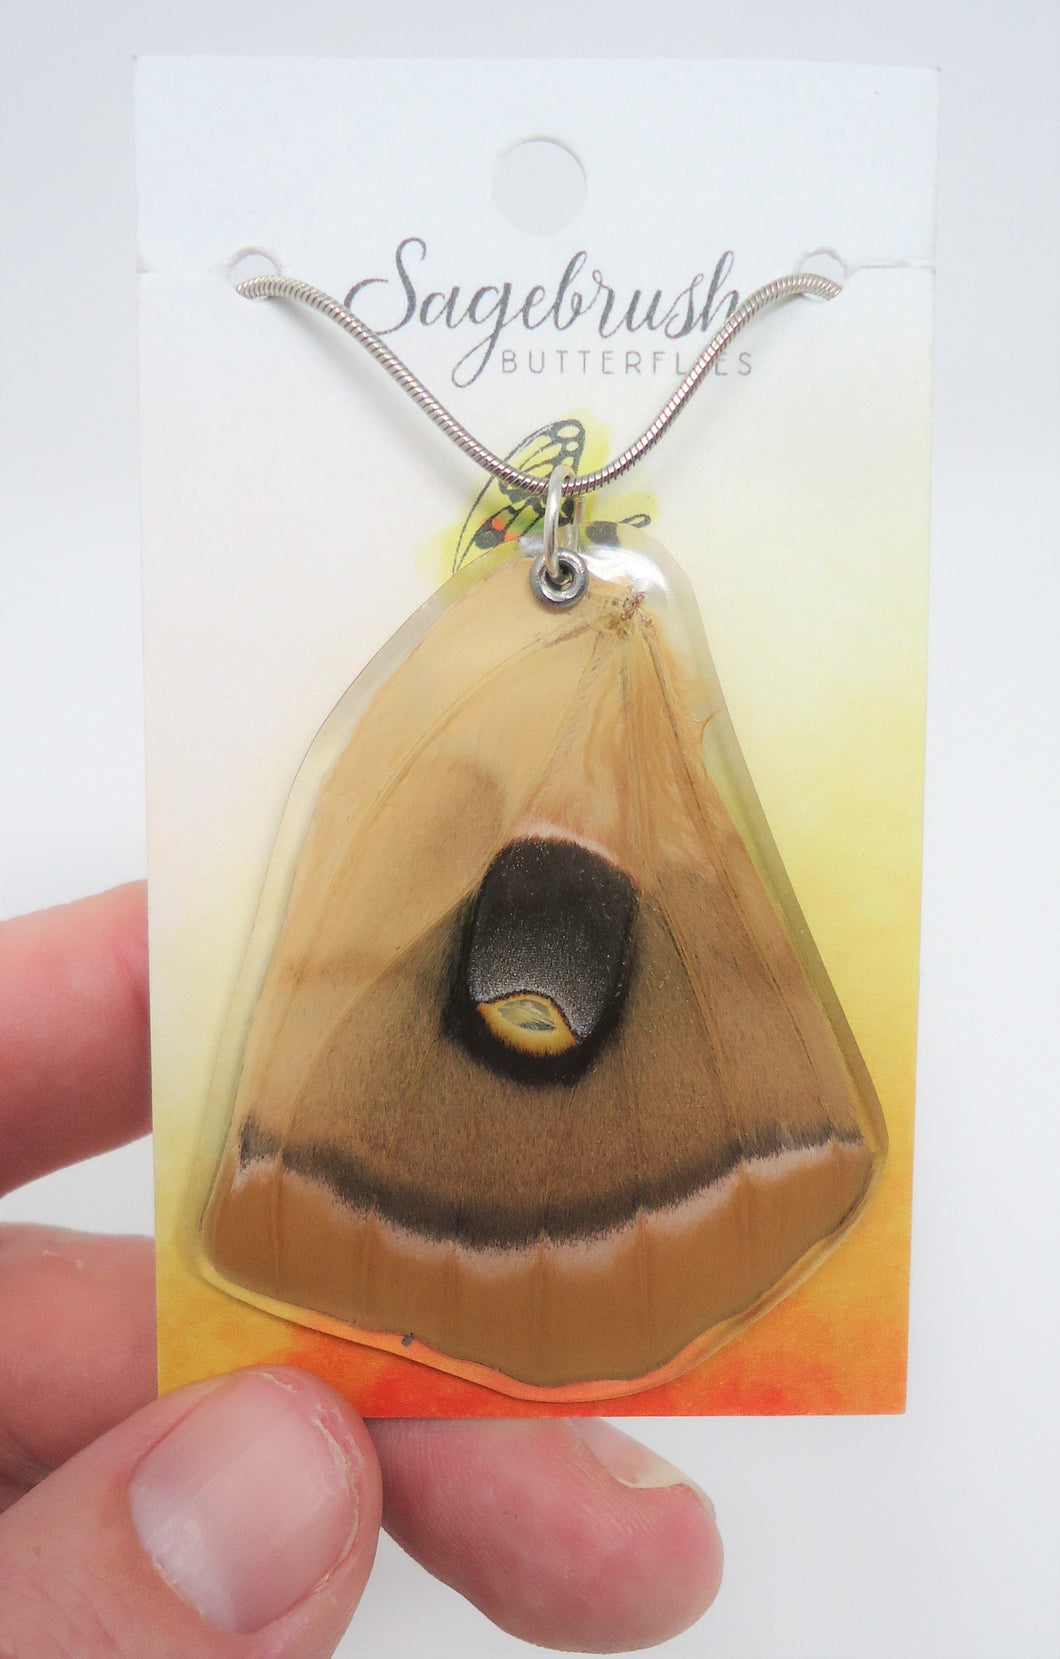 Polyphemus Moth Resin Wing Necklace